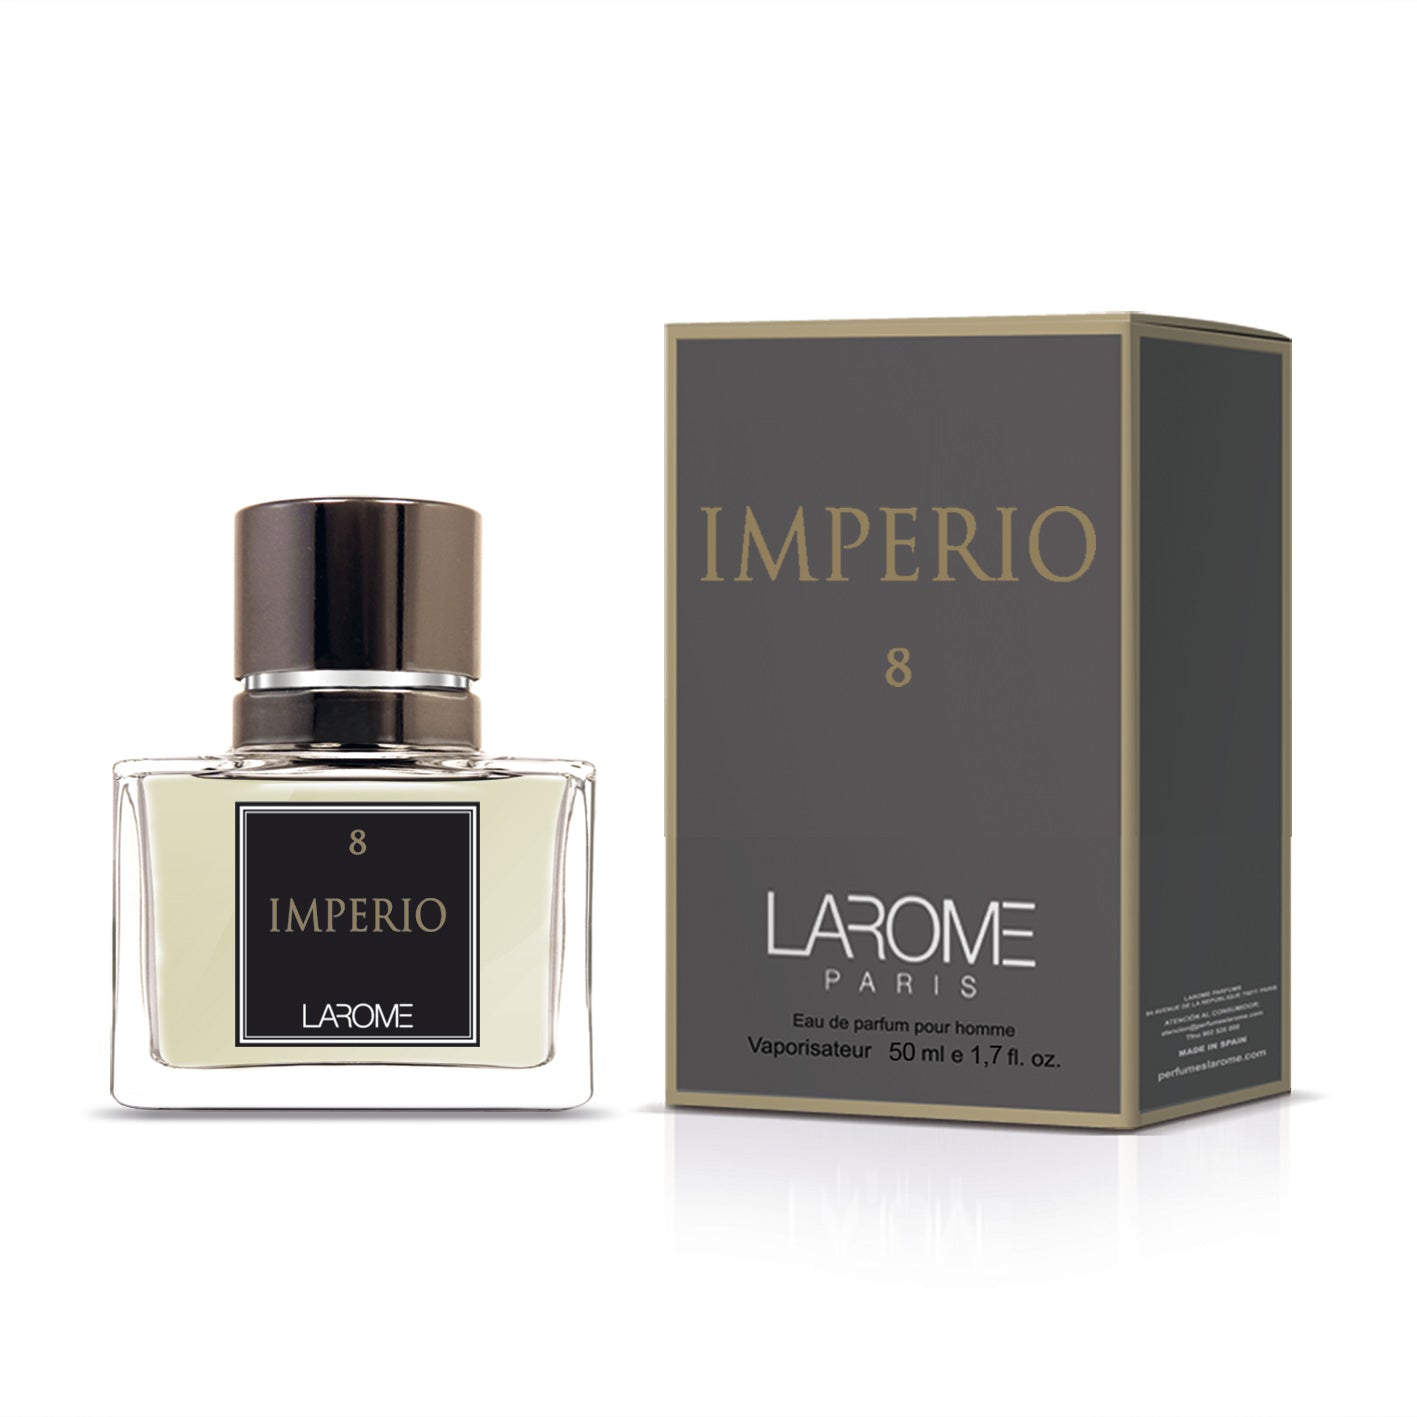 Imperio 8M by Larome geïnspireerd door Emporio